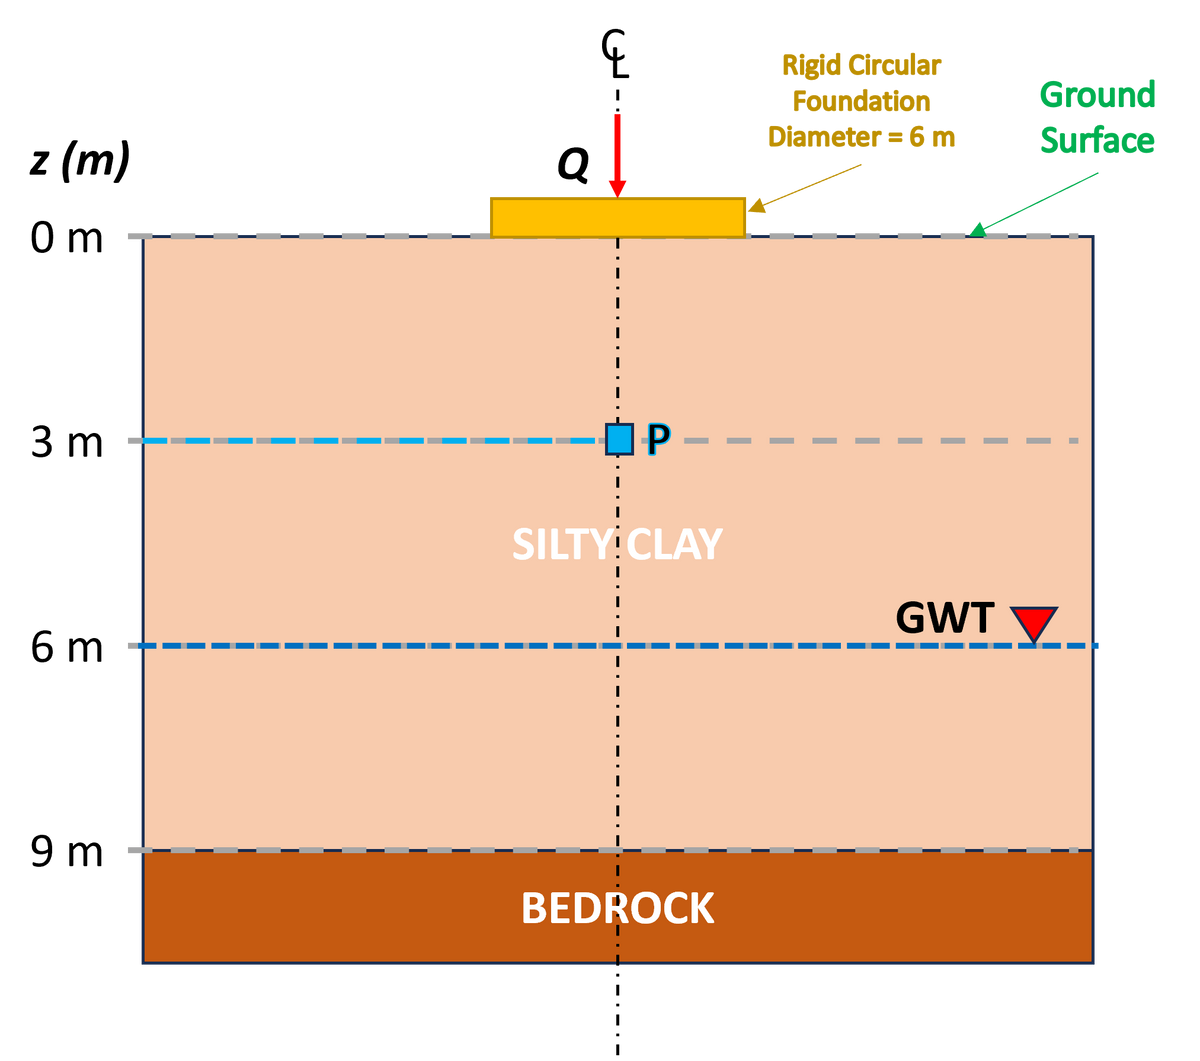 z (m)
0m
3 m
6 m
9 m
Ï
I
Q
Ç
P-
SILTY: CLAY
BEDROCK
Rigid Circular
Foundation
Diameter = 6 m
Ground
Surface
■
GWT.